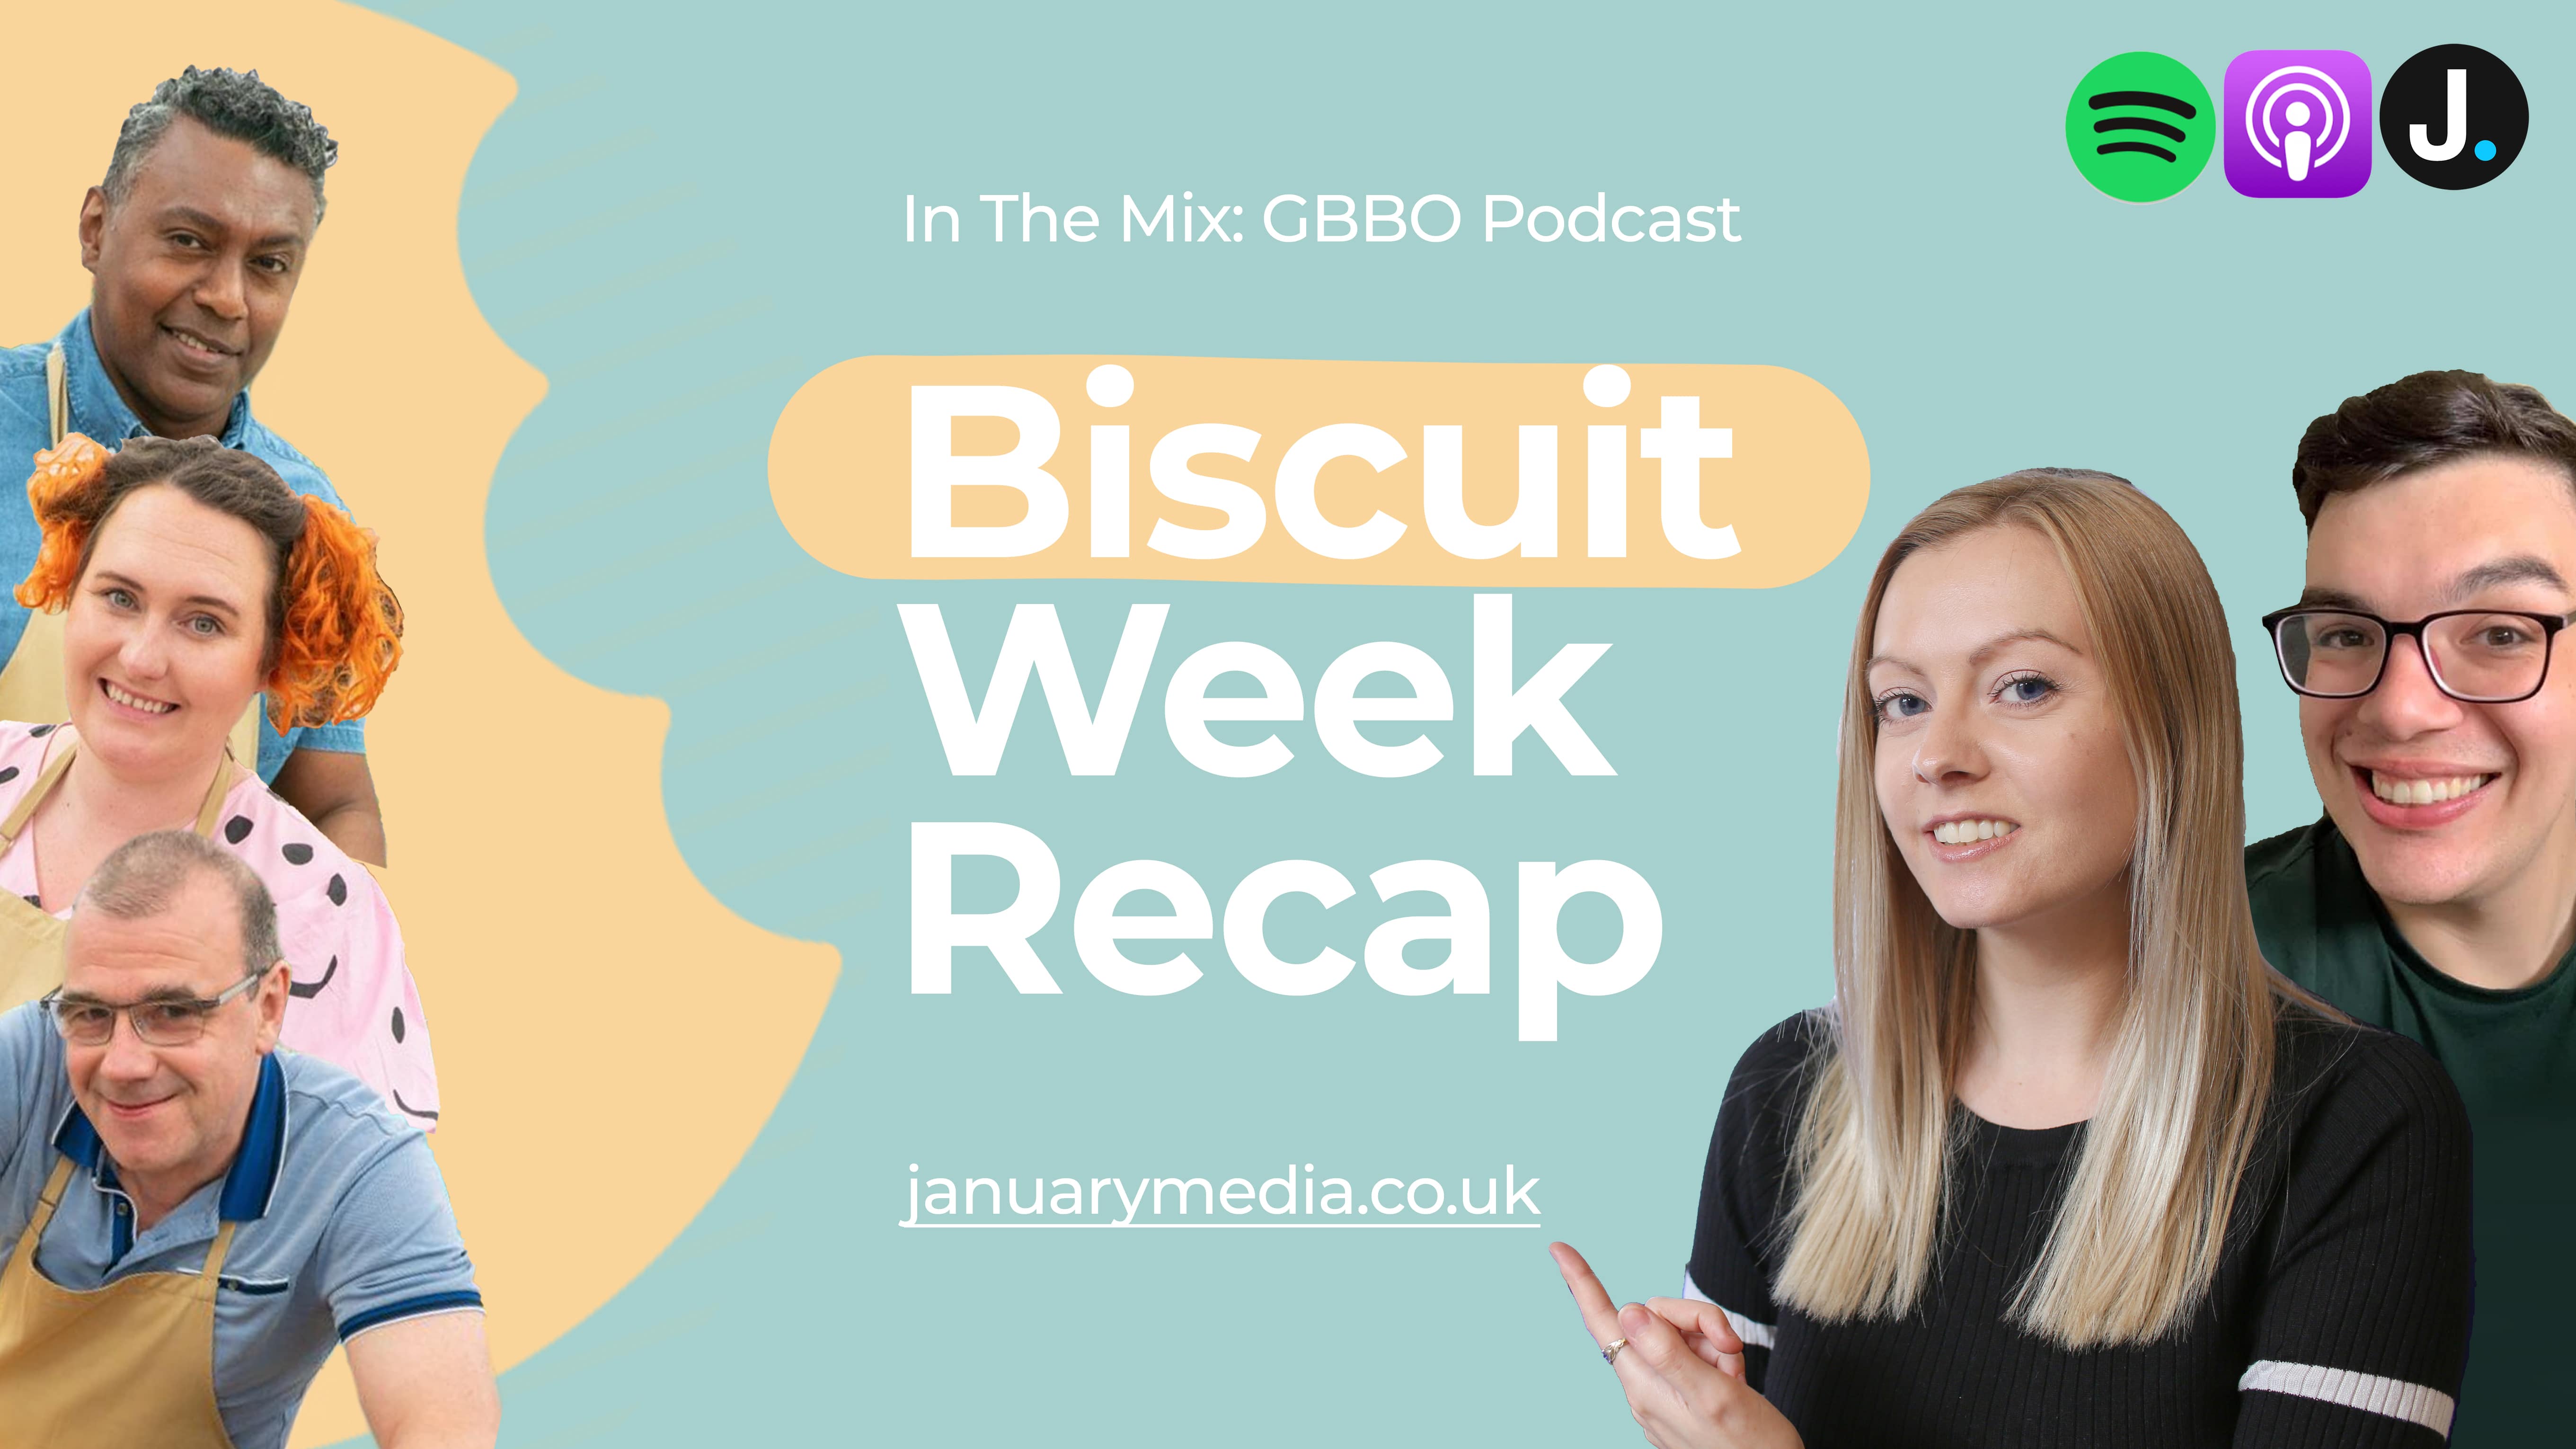 Recapping Biscuit Week On The Great British Bake Off (Season 12, Episode 2) - Biscuit Week Bake Off